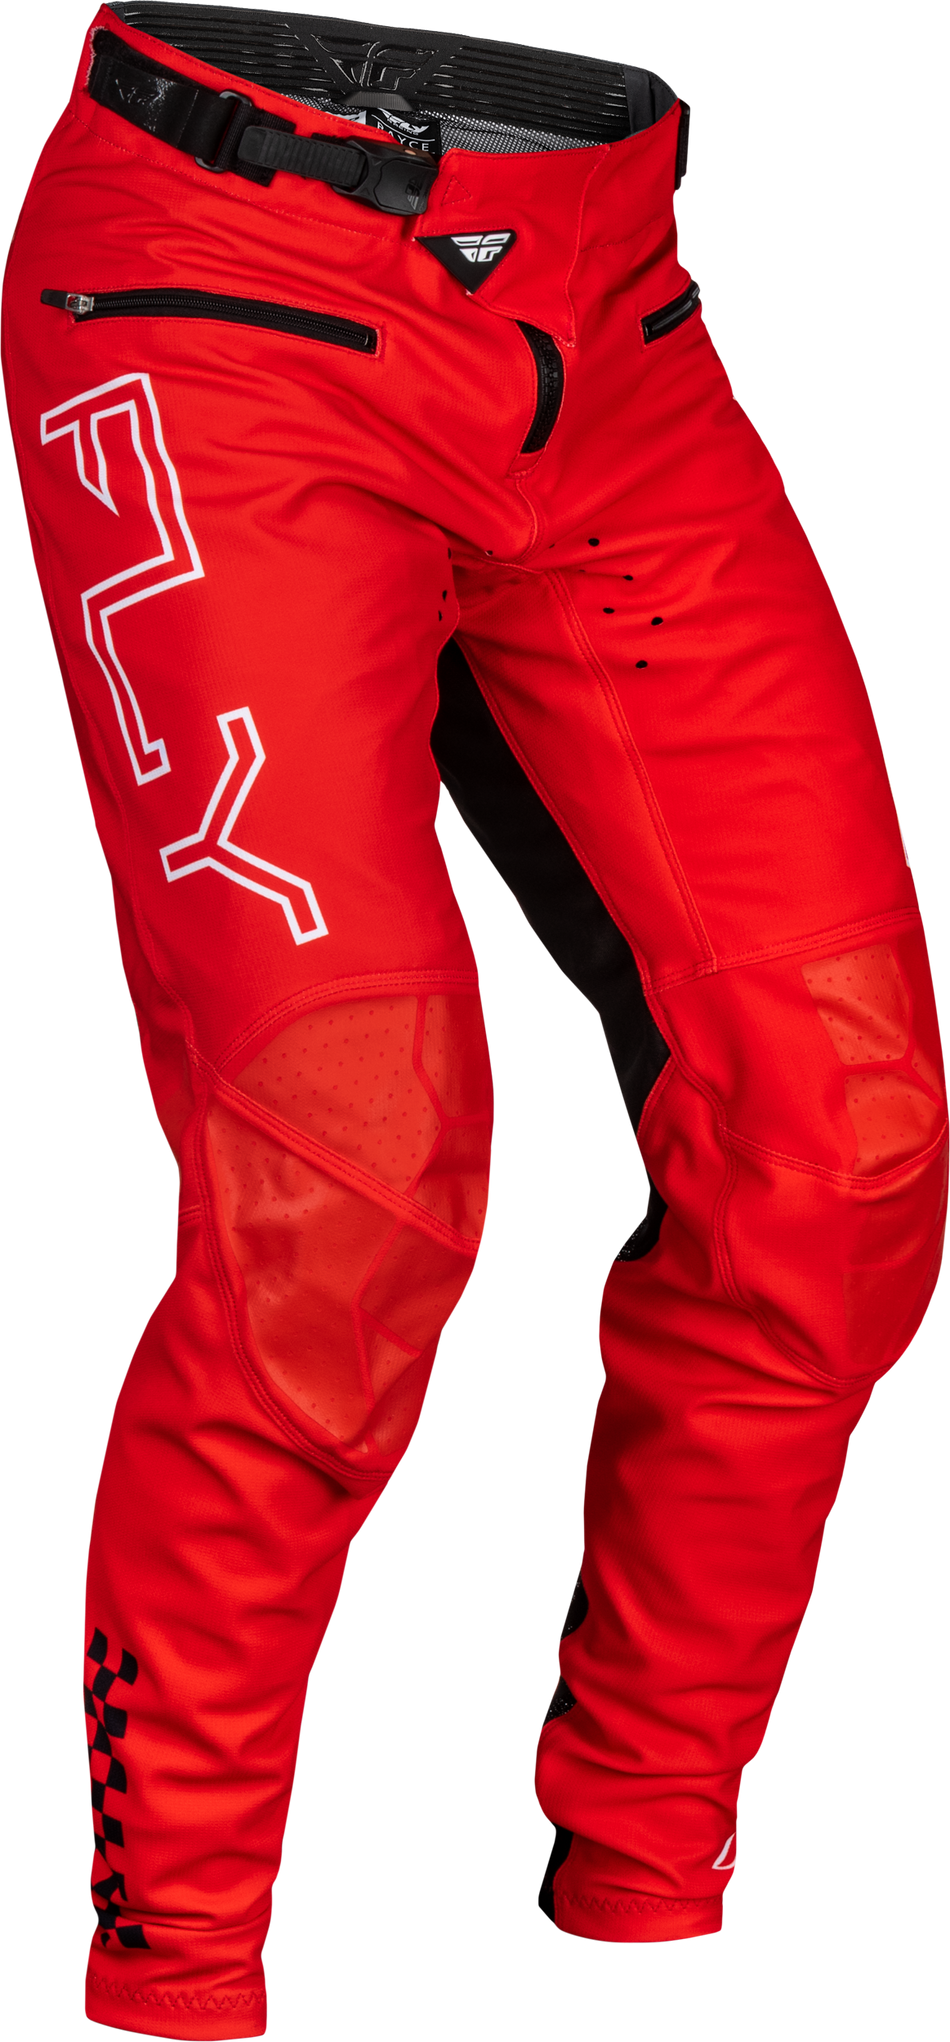 FLY RACING Rayce Bicycle Pants Red Sz 30 377-06330